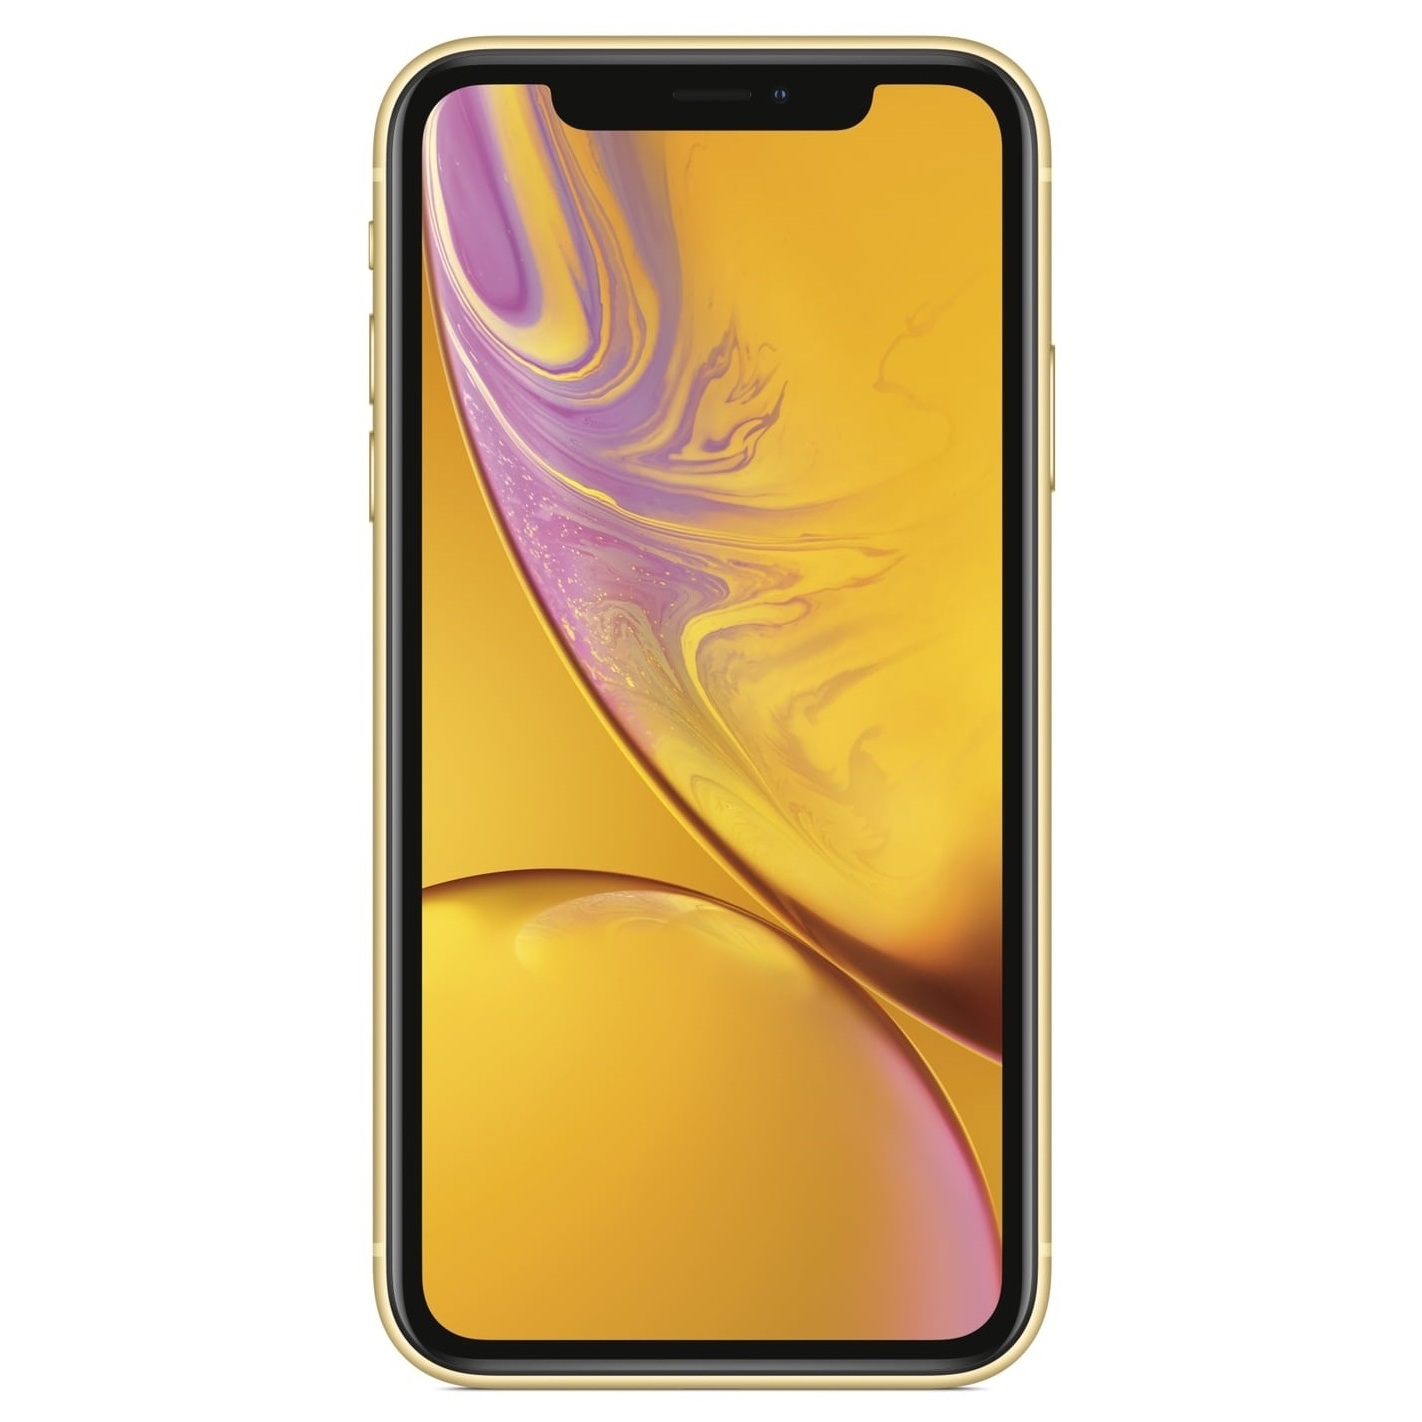 Apple iPhone XR (64GB) – Yellow price in Bahrain